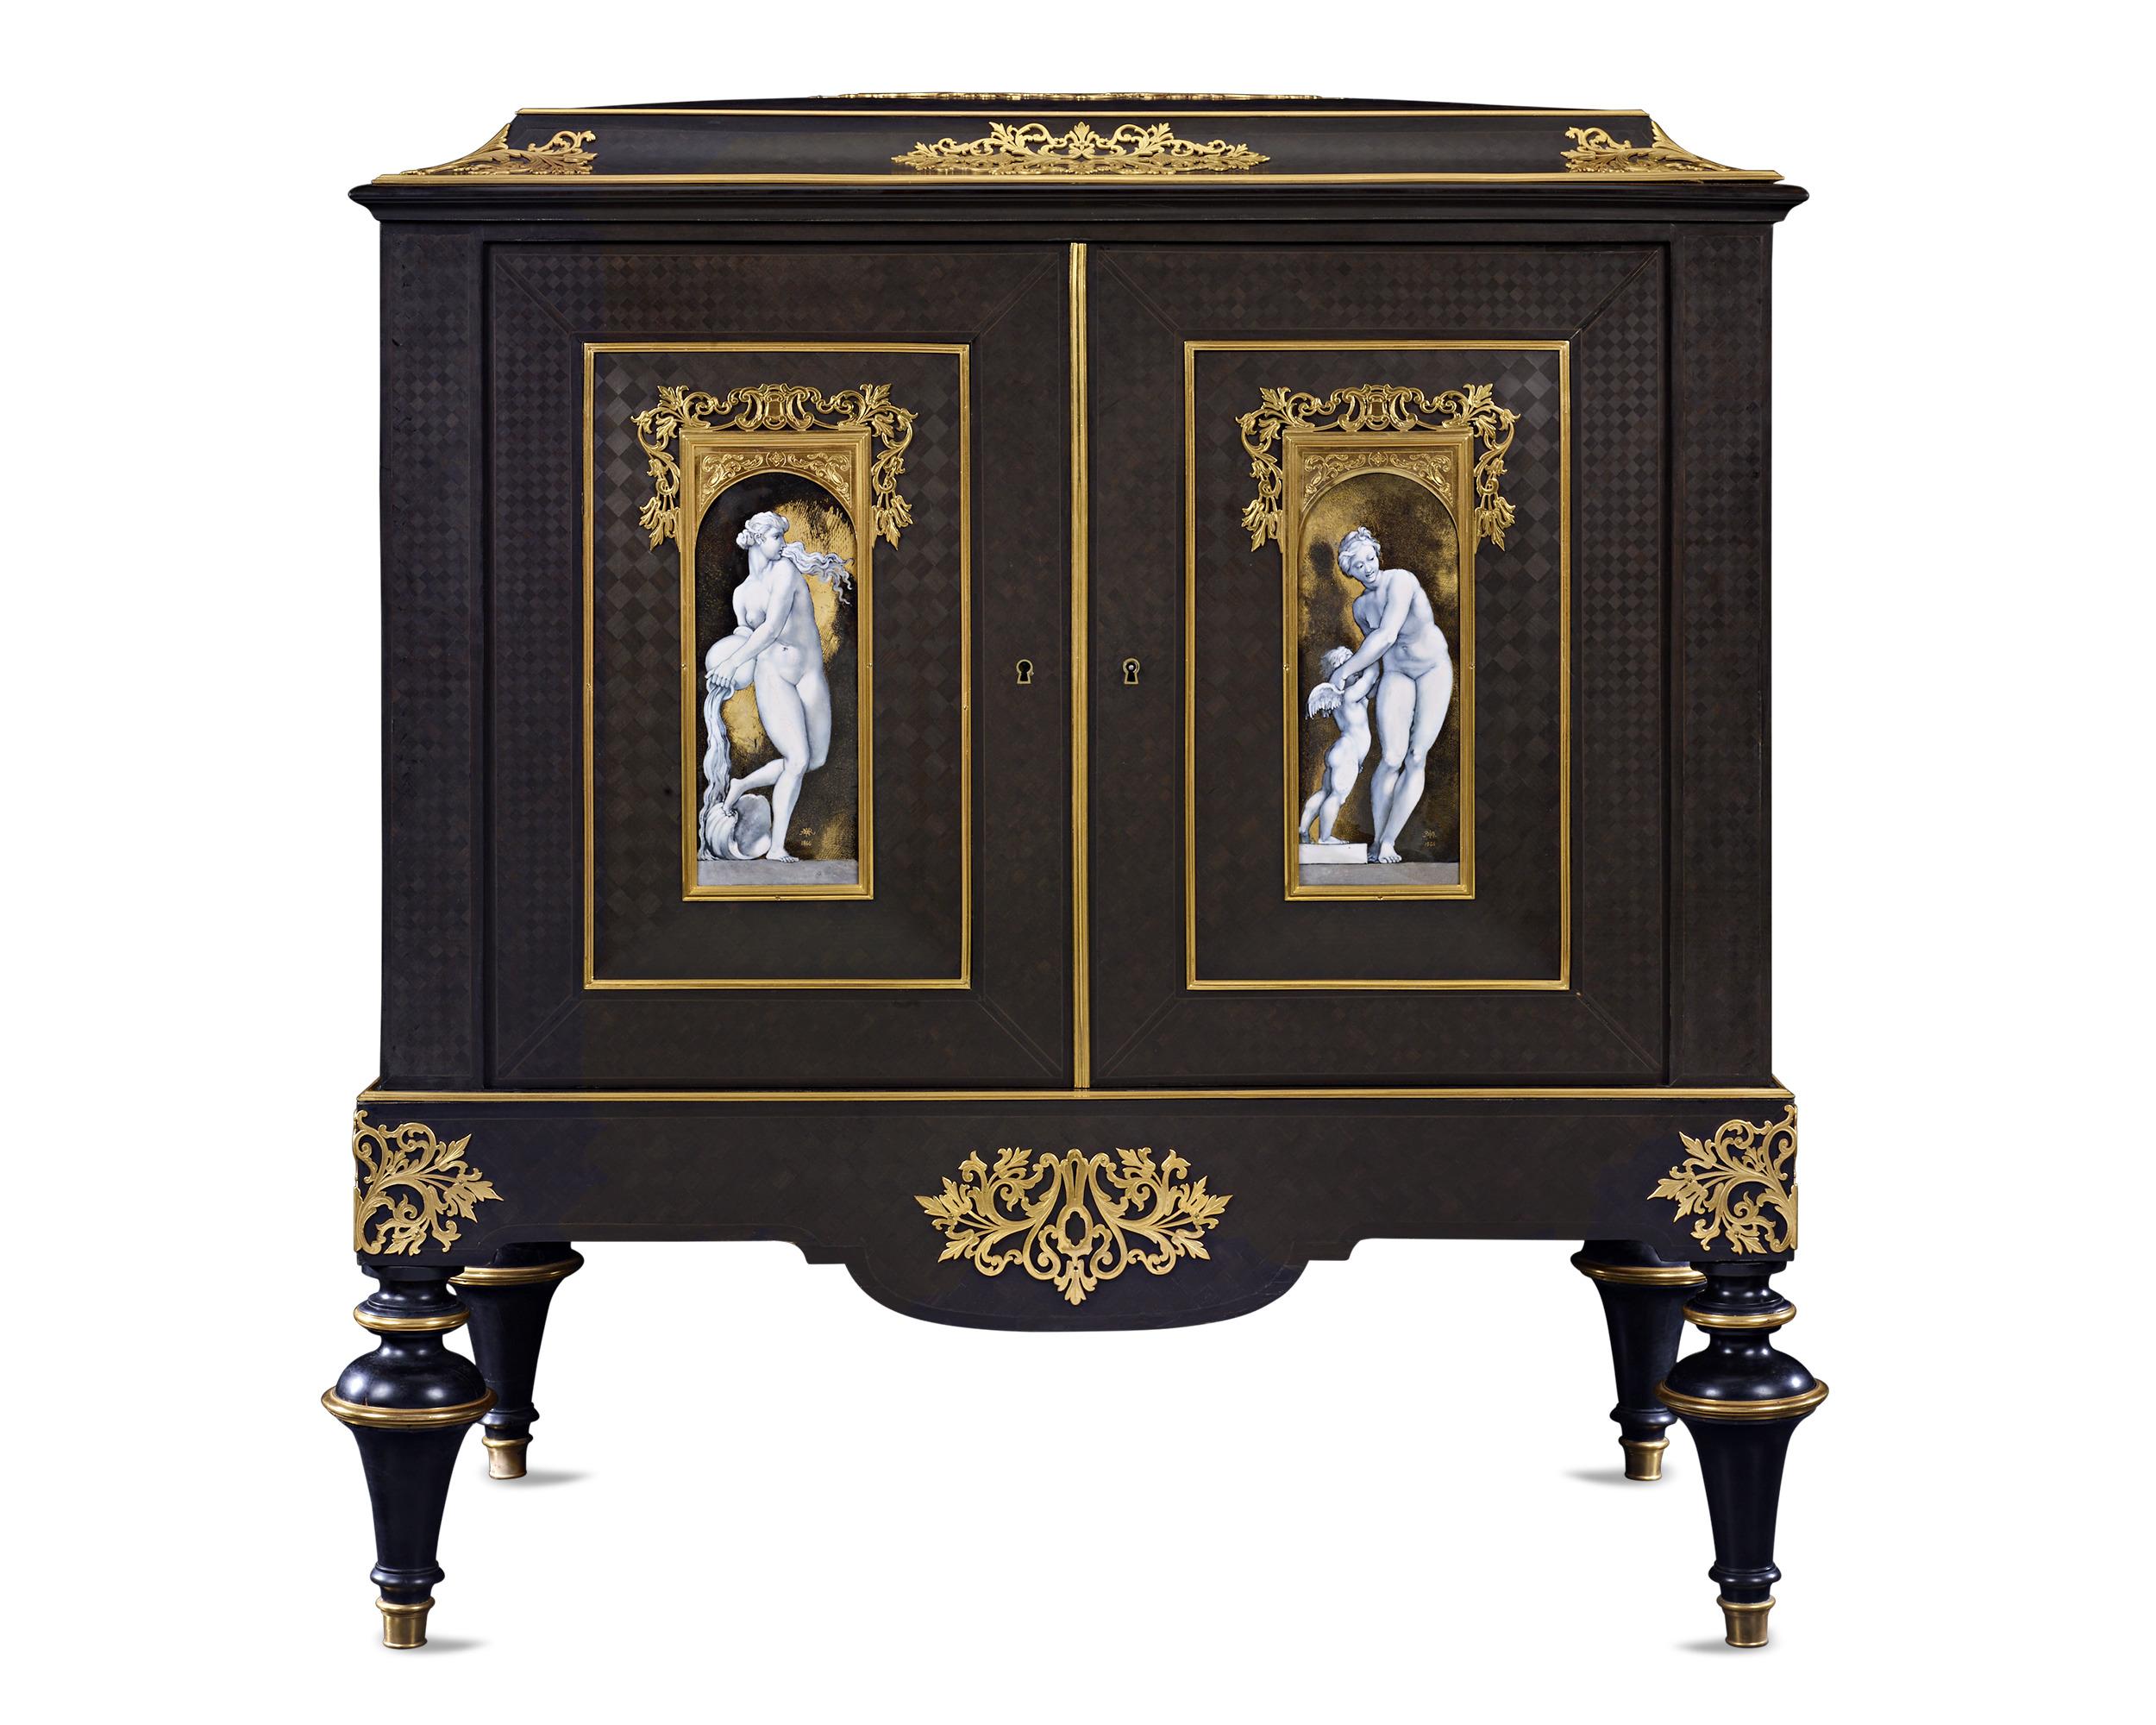 Napoleon III Second Empire Ormolu and Ebony Jewelry Cabinet by Giroux